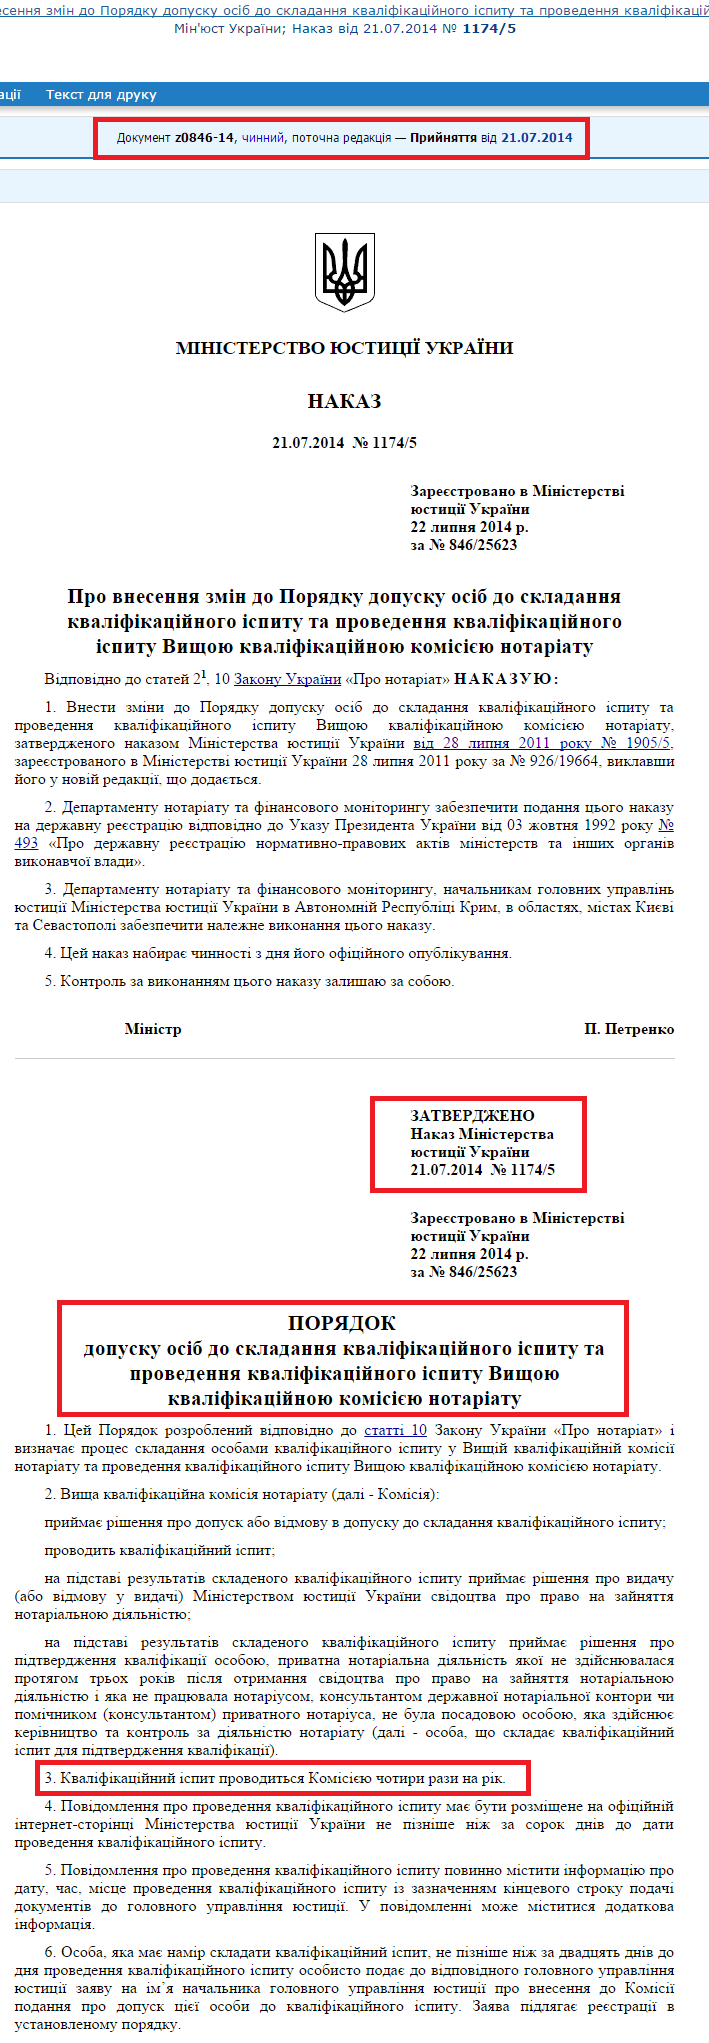 http://zakon2.rada.gov.ua/laws/show/z0846-14